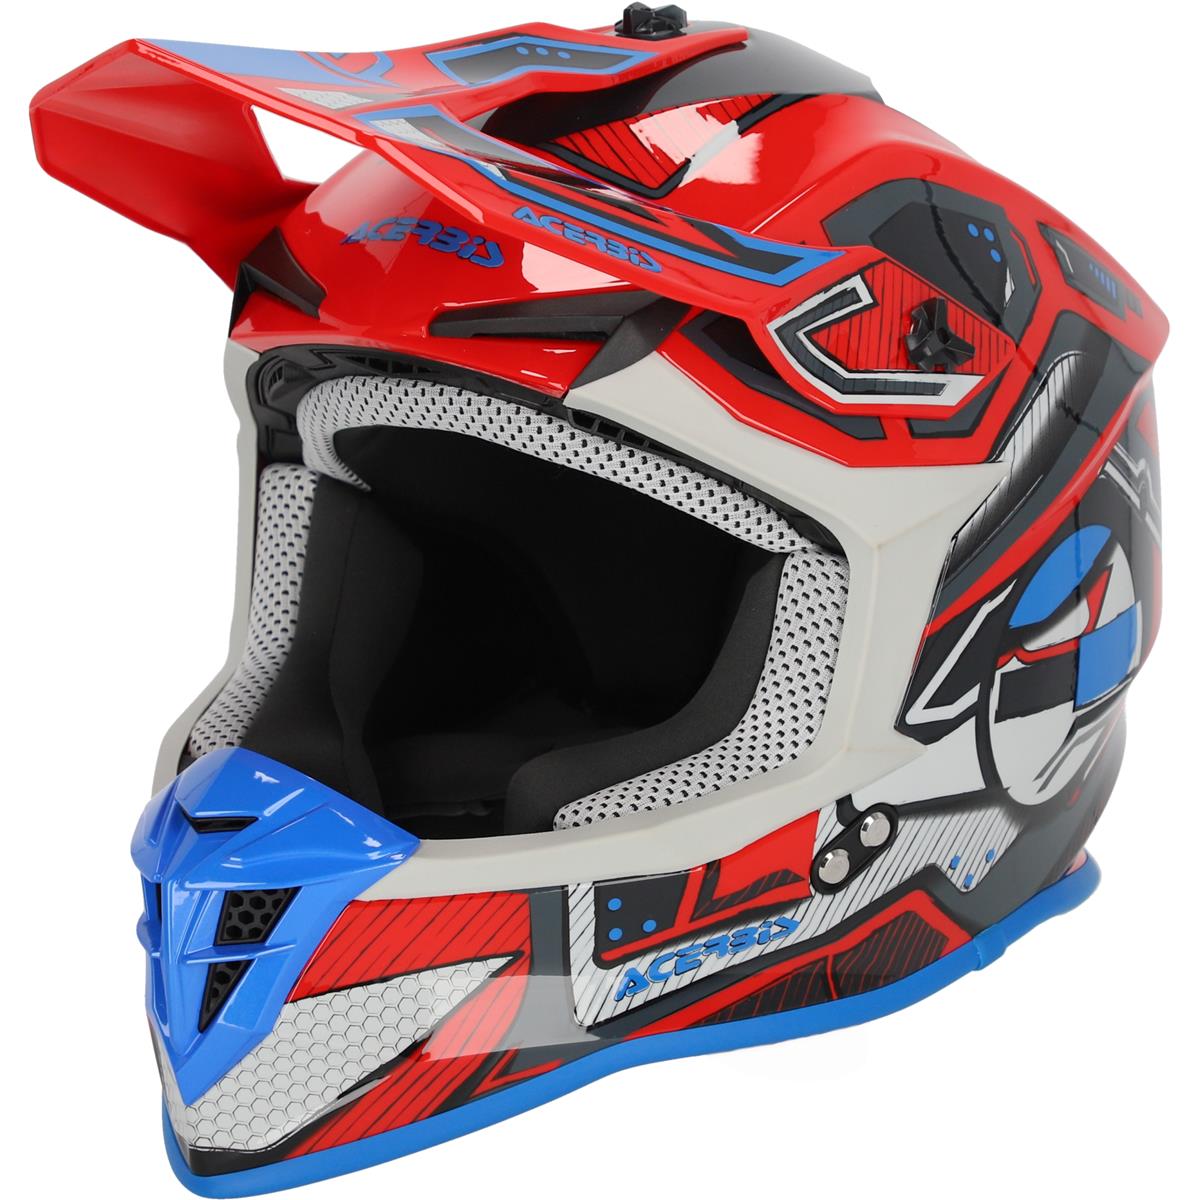 Acerbis Motocross-Helm Linear 22-06 Rot/Blau